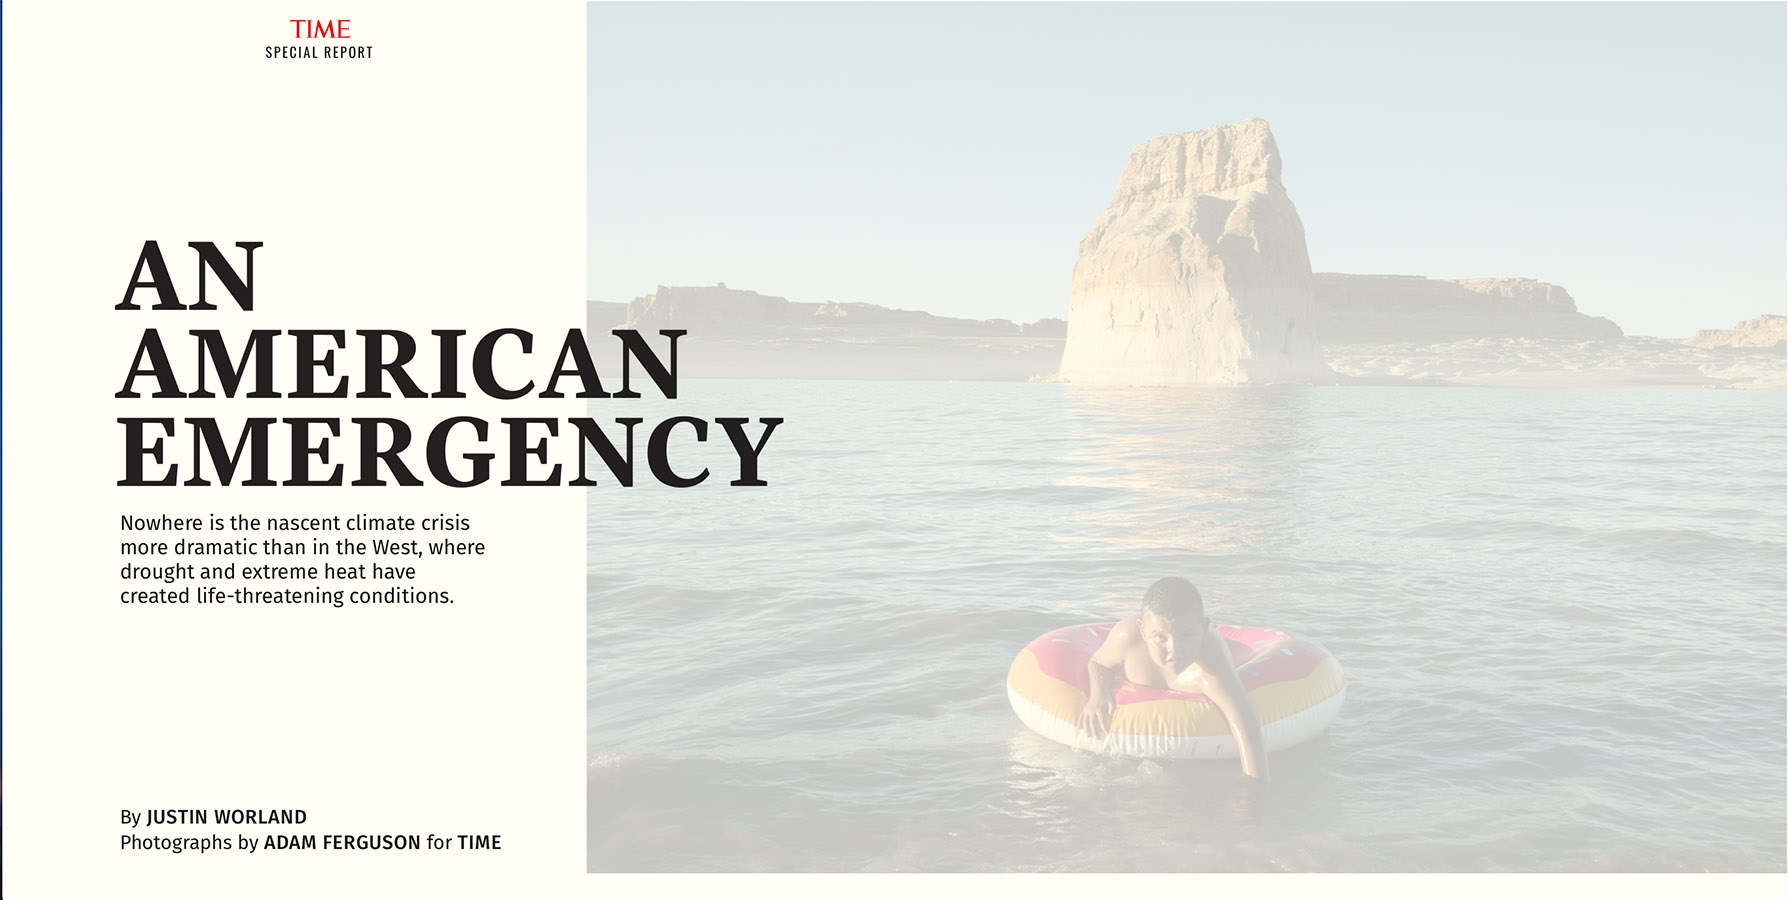 “An American Emergency,” photographs by Adam Ferguson, August 16 at time.com